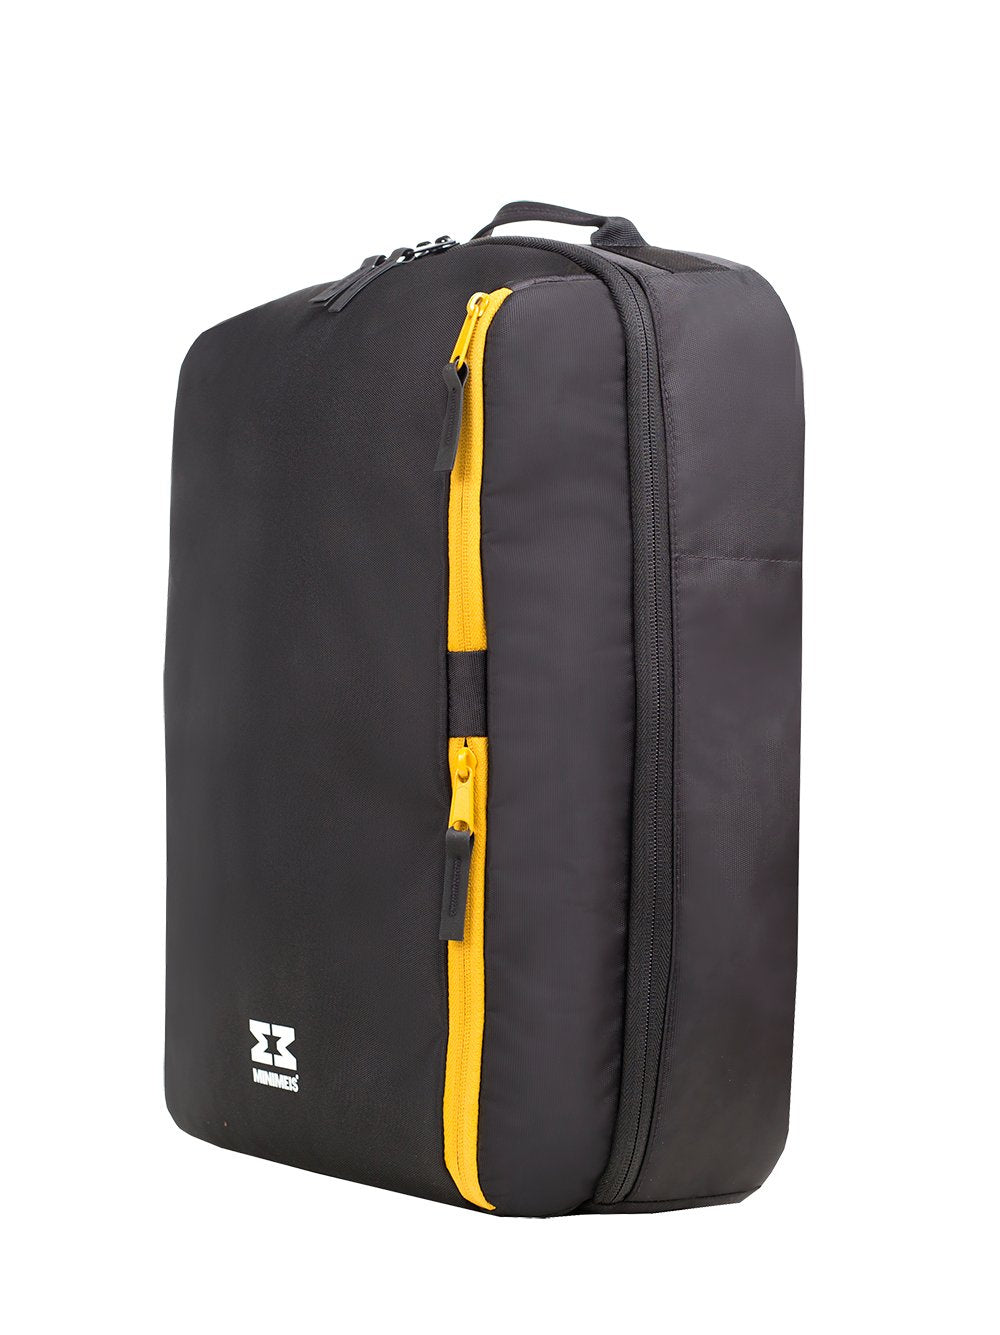 Minimumis - backpack - Yellow - Black